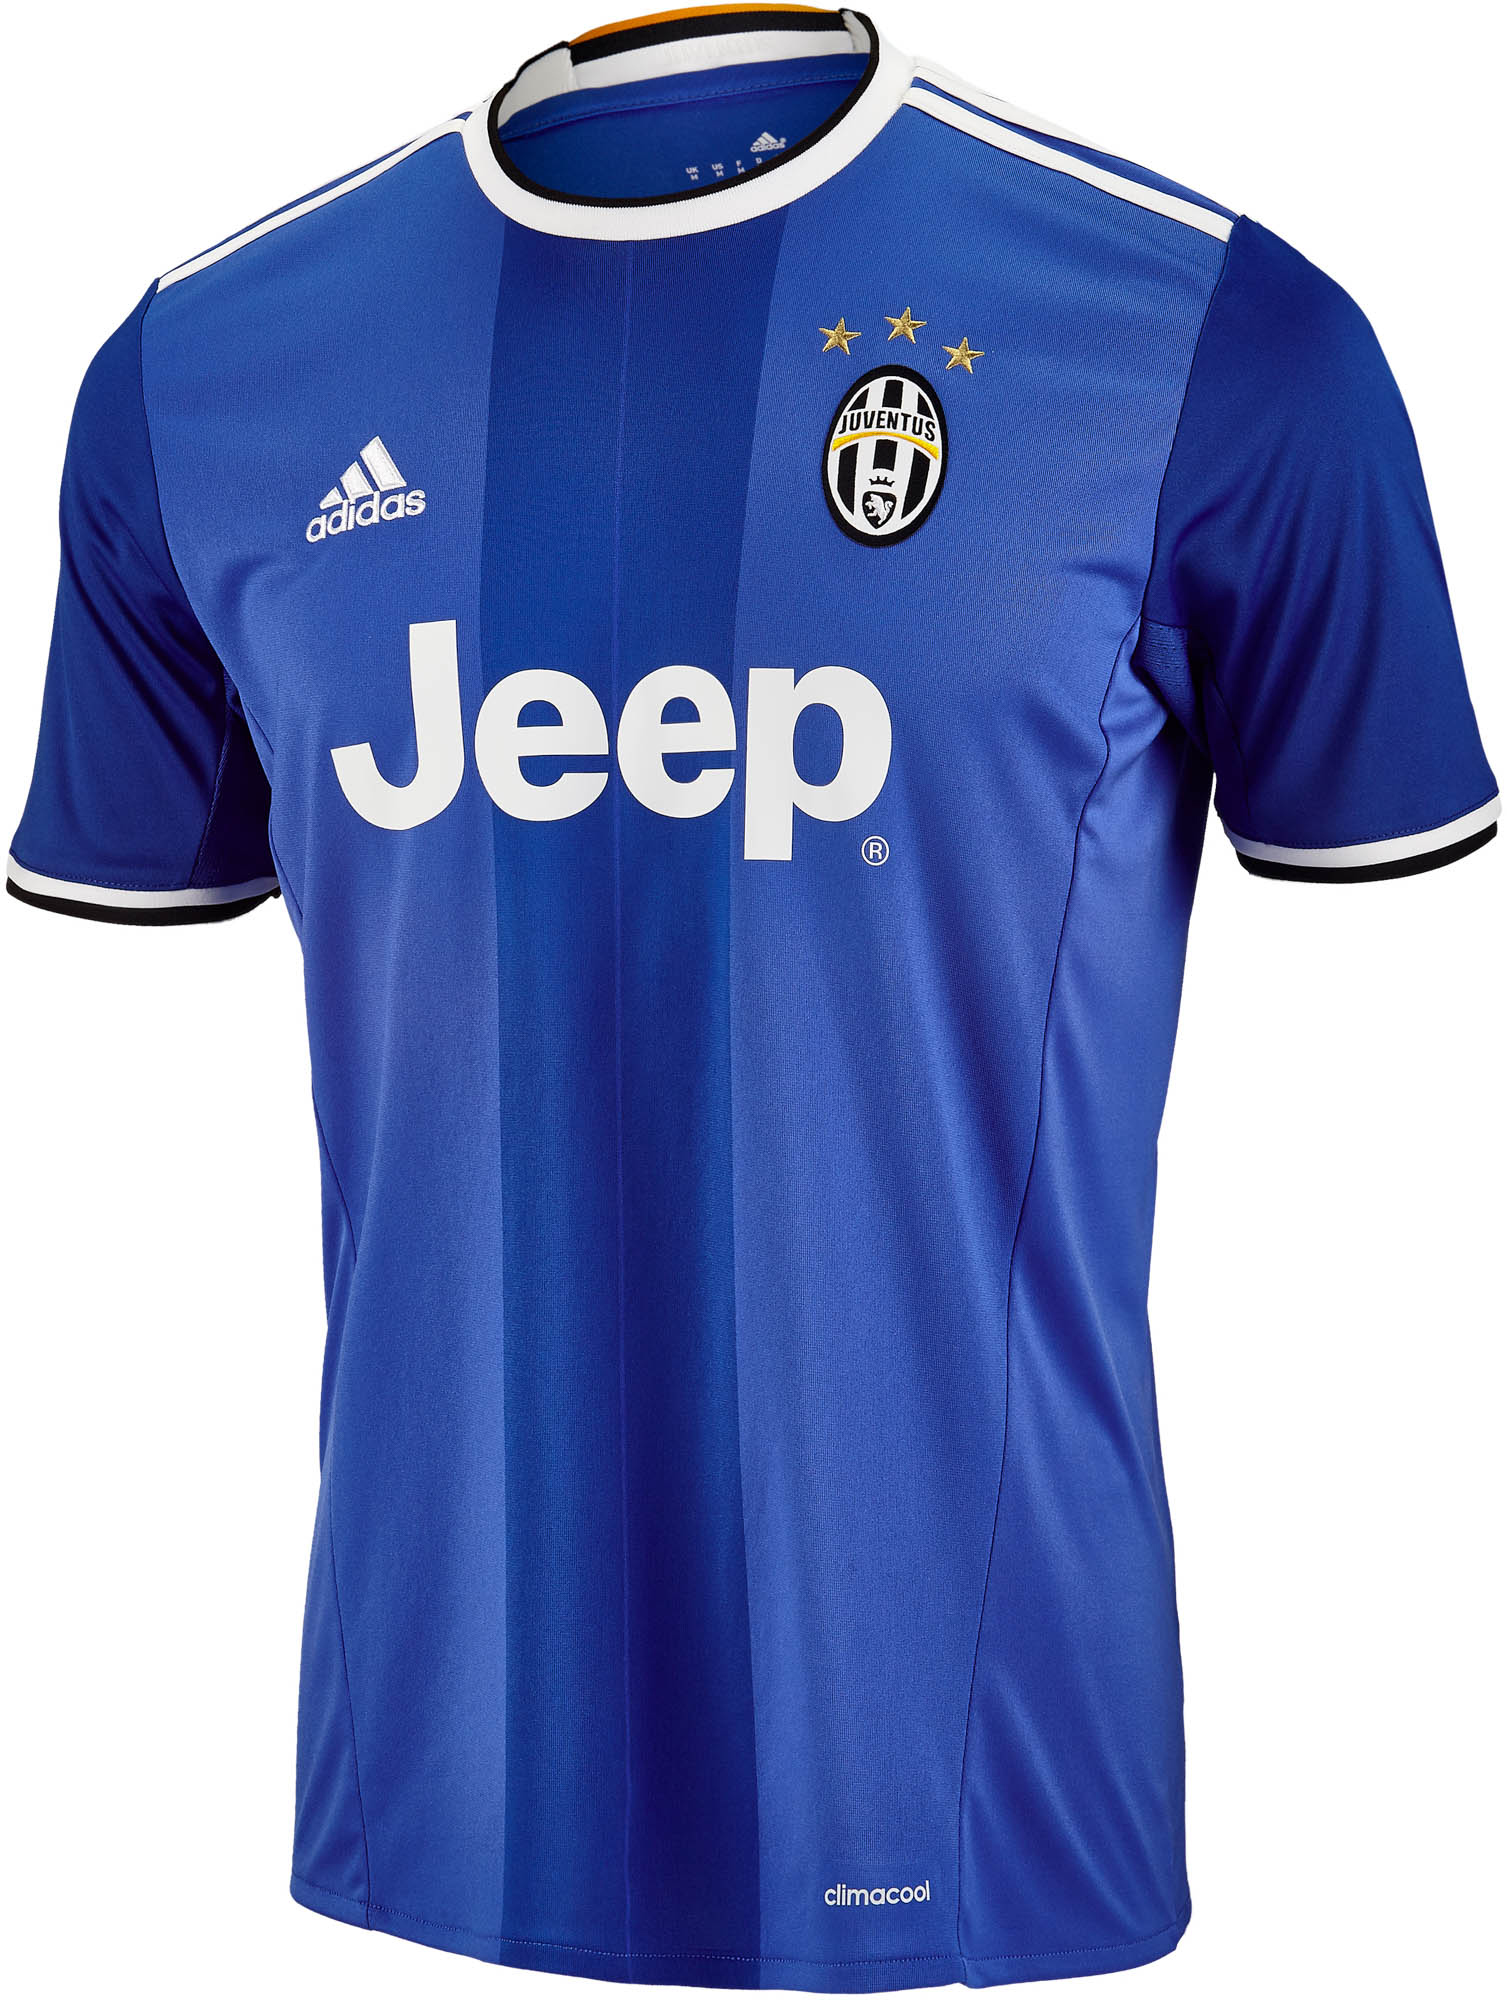 Vernauwd Riskeren vorst adidas Juventus Away Jersey - 2016 Juventus Soccer Jerseys